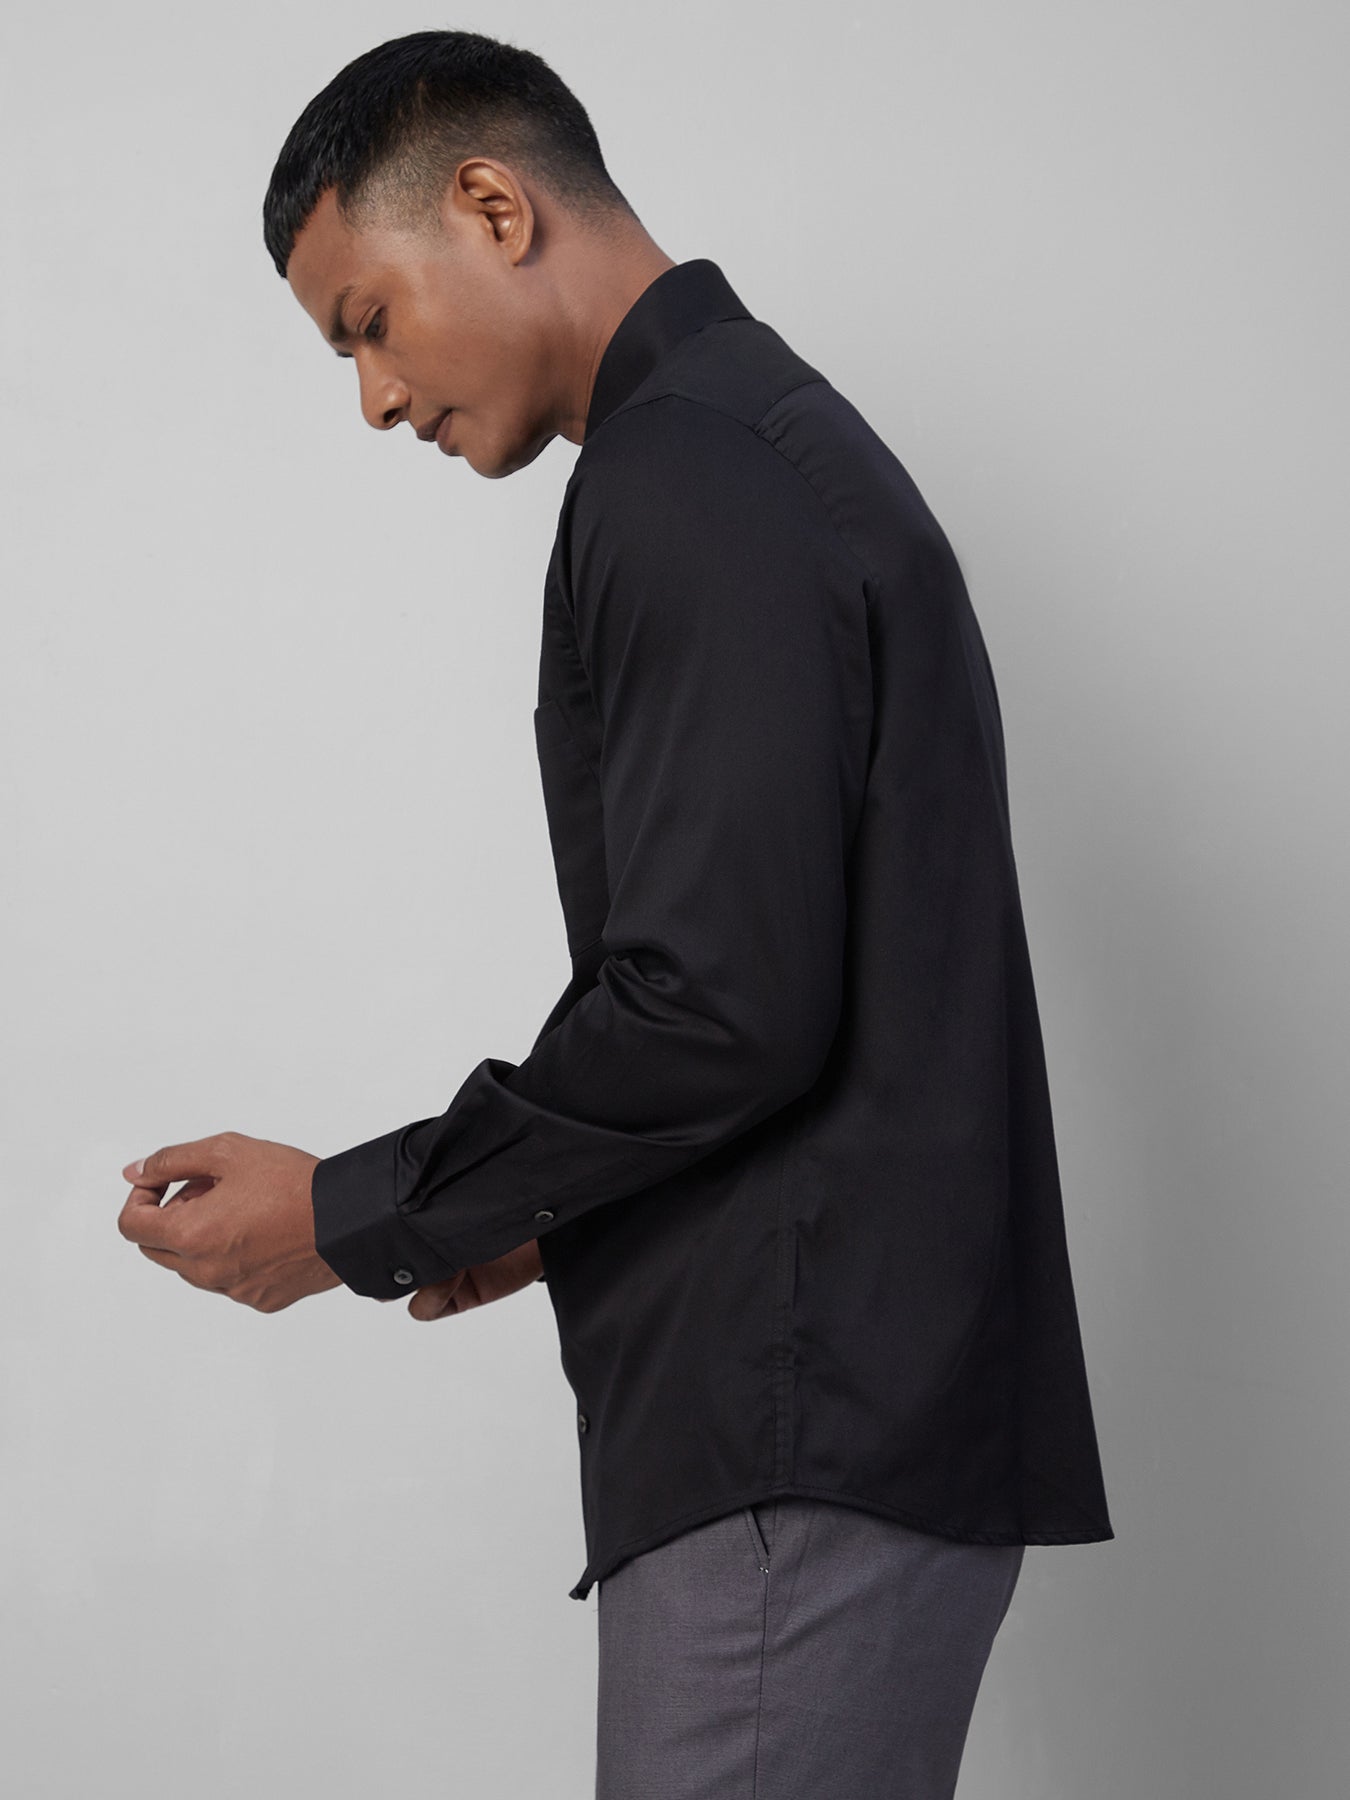 black-formal-men's-cotton-stretch-shirt---fashion-collection-(plains)